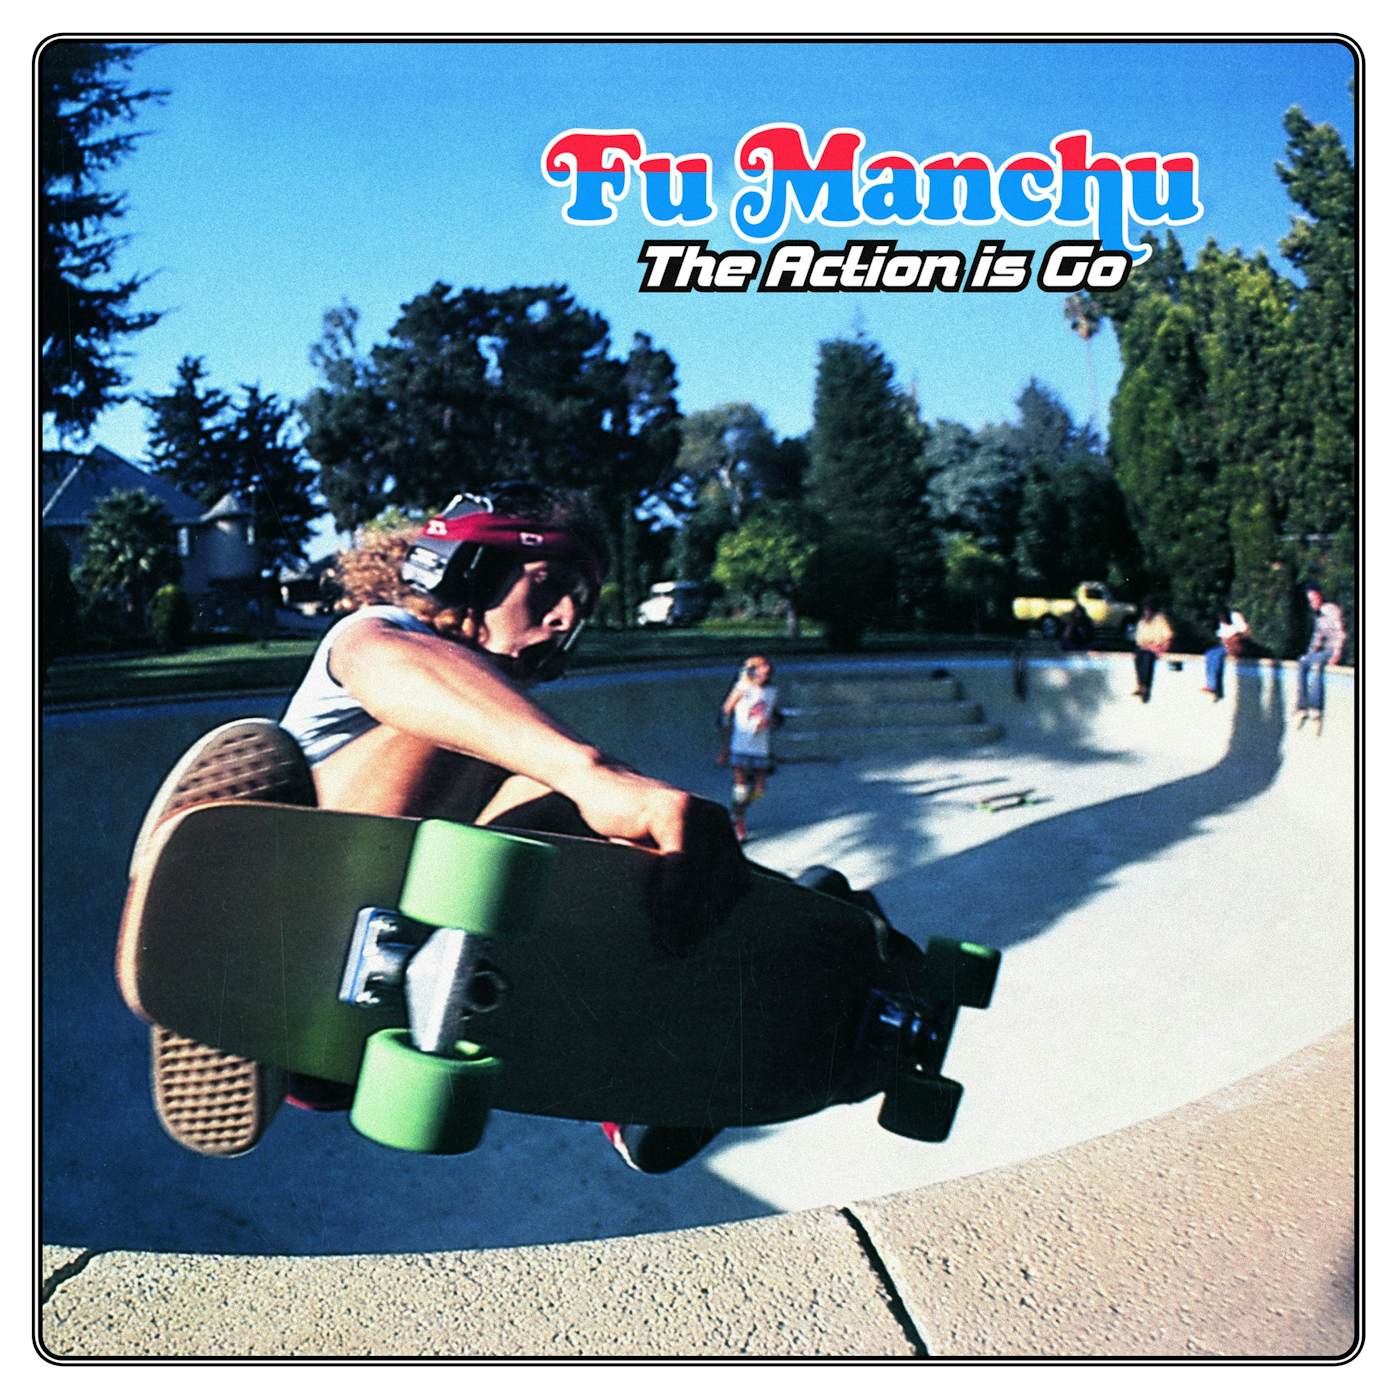 Fu Manchu 'The Action Is Go! Deluxe Edition' Vinyl 2xLP Green/Blue + Vinyl 7" Clear Sparkle Vinyl Record